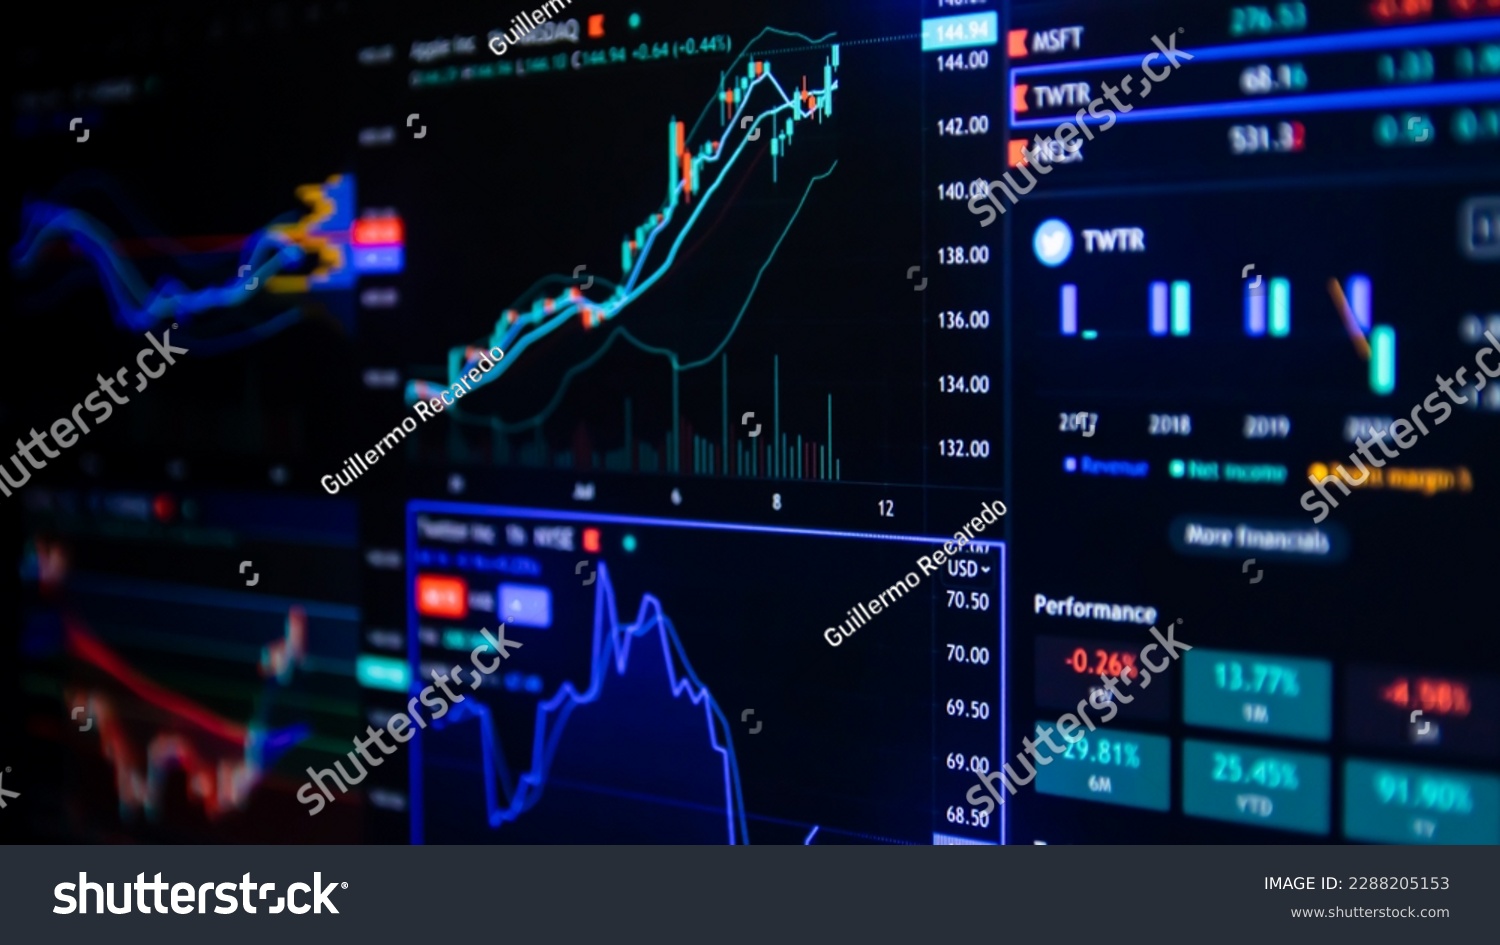 Stock market data on monitor. Business financial graph on monitor screen. Stock market data on monitor. Business financial graph on monitor. #2288205153